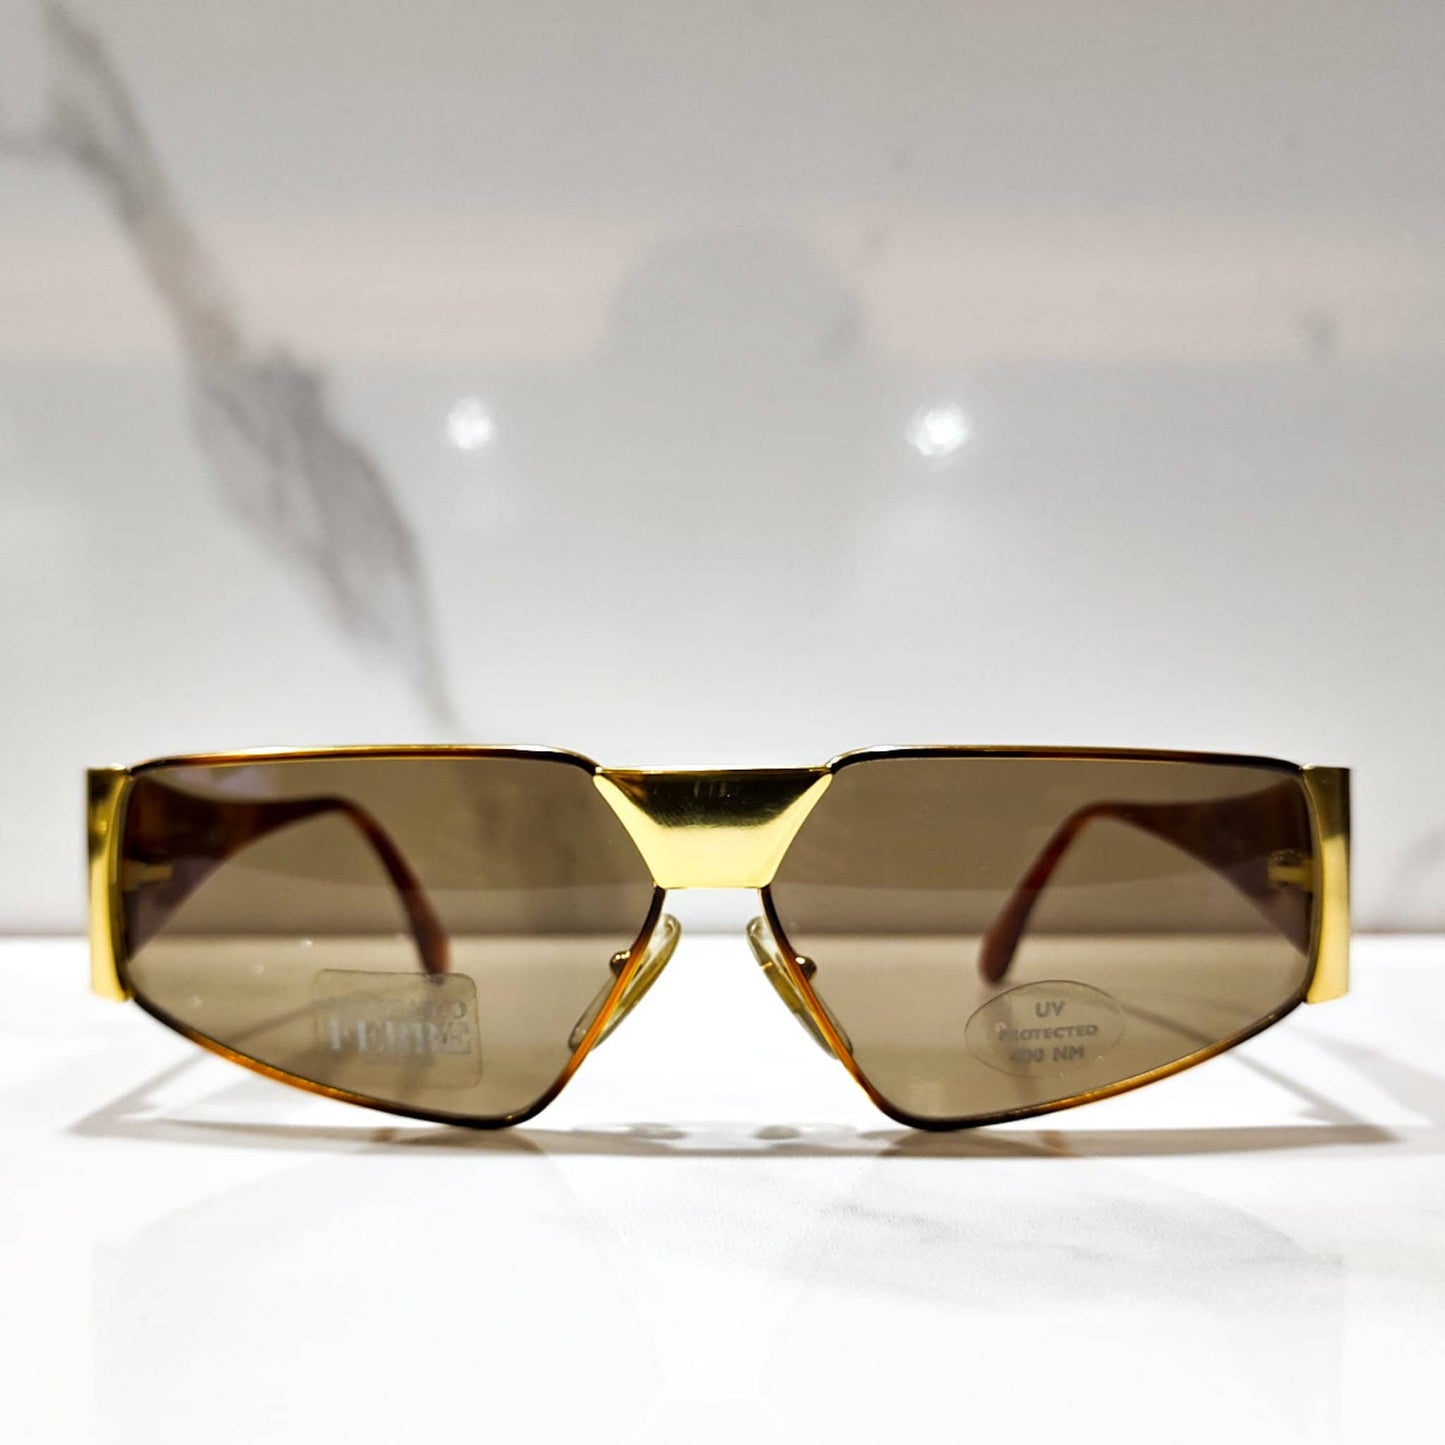 Gianfranco Ferre GFF 38 vintage sunglasses lunette brille 90s